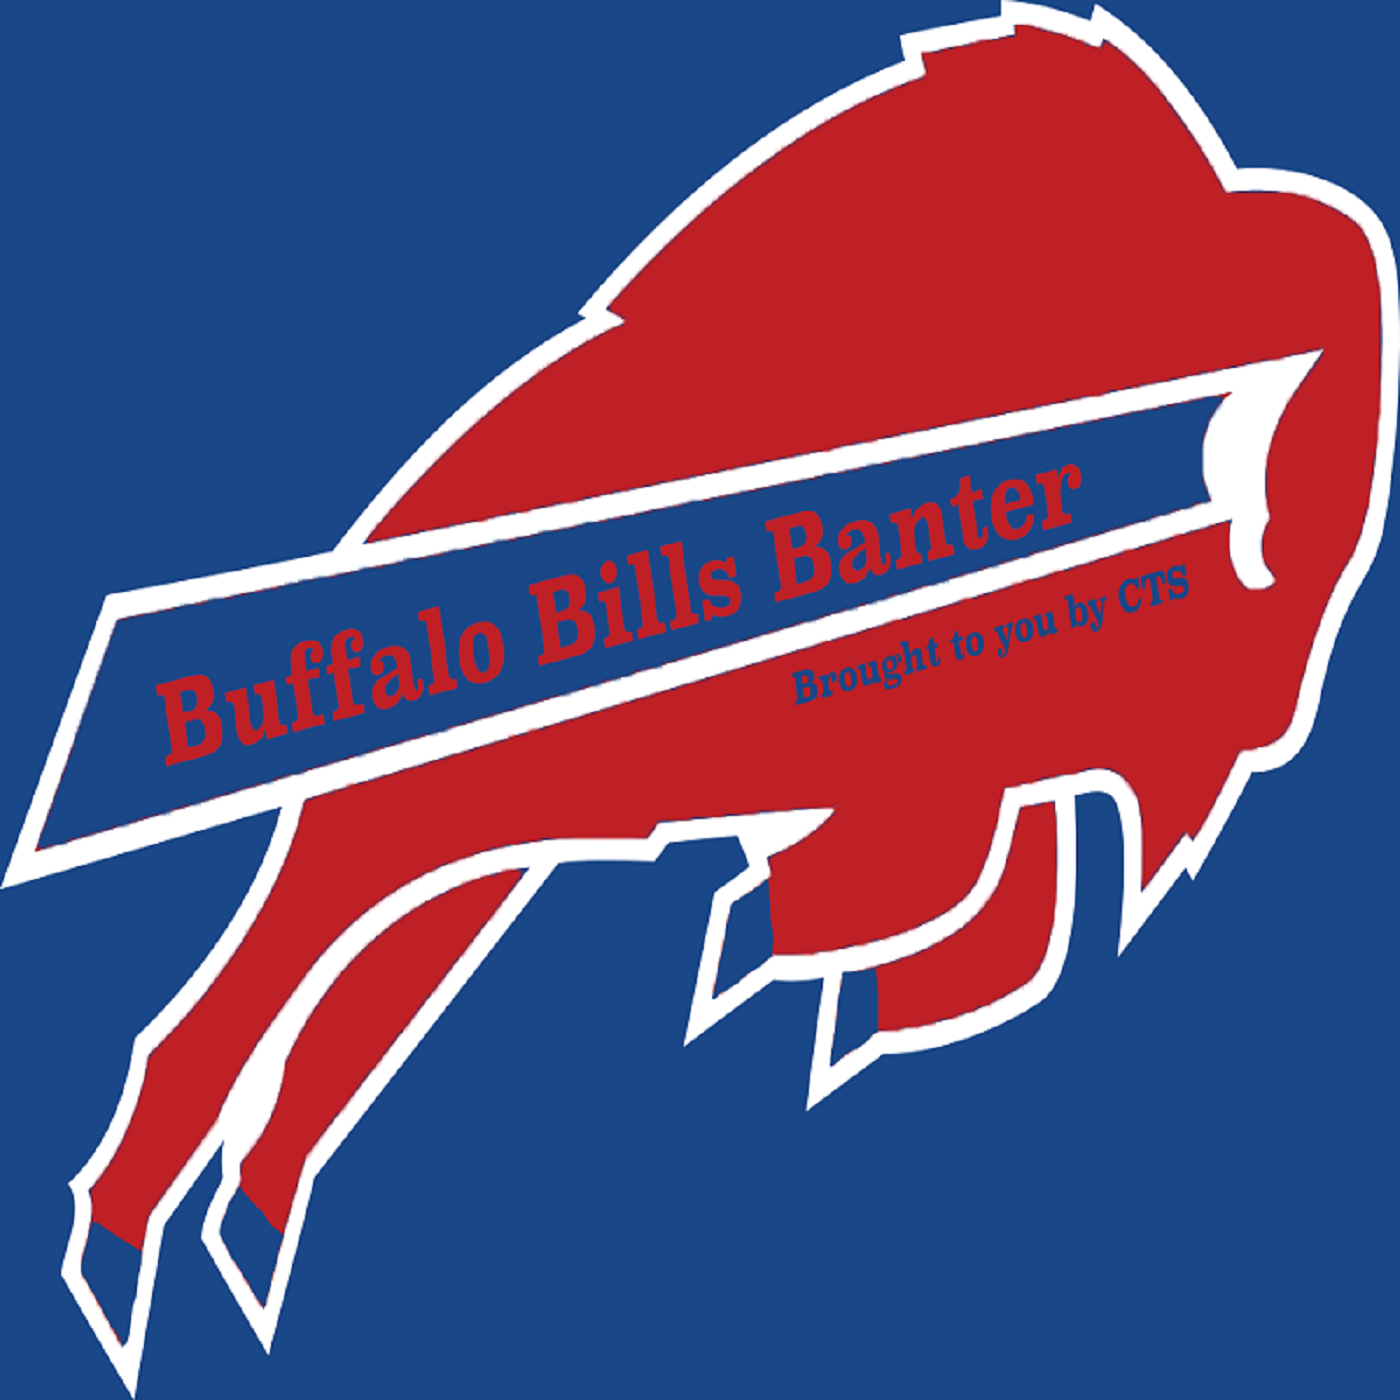 Buffalo Bills Banter